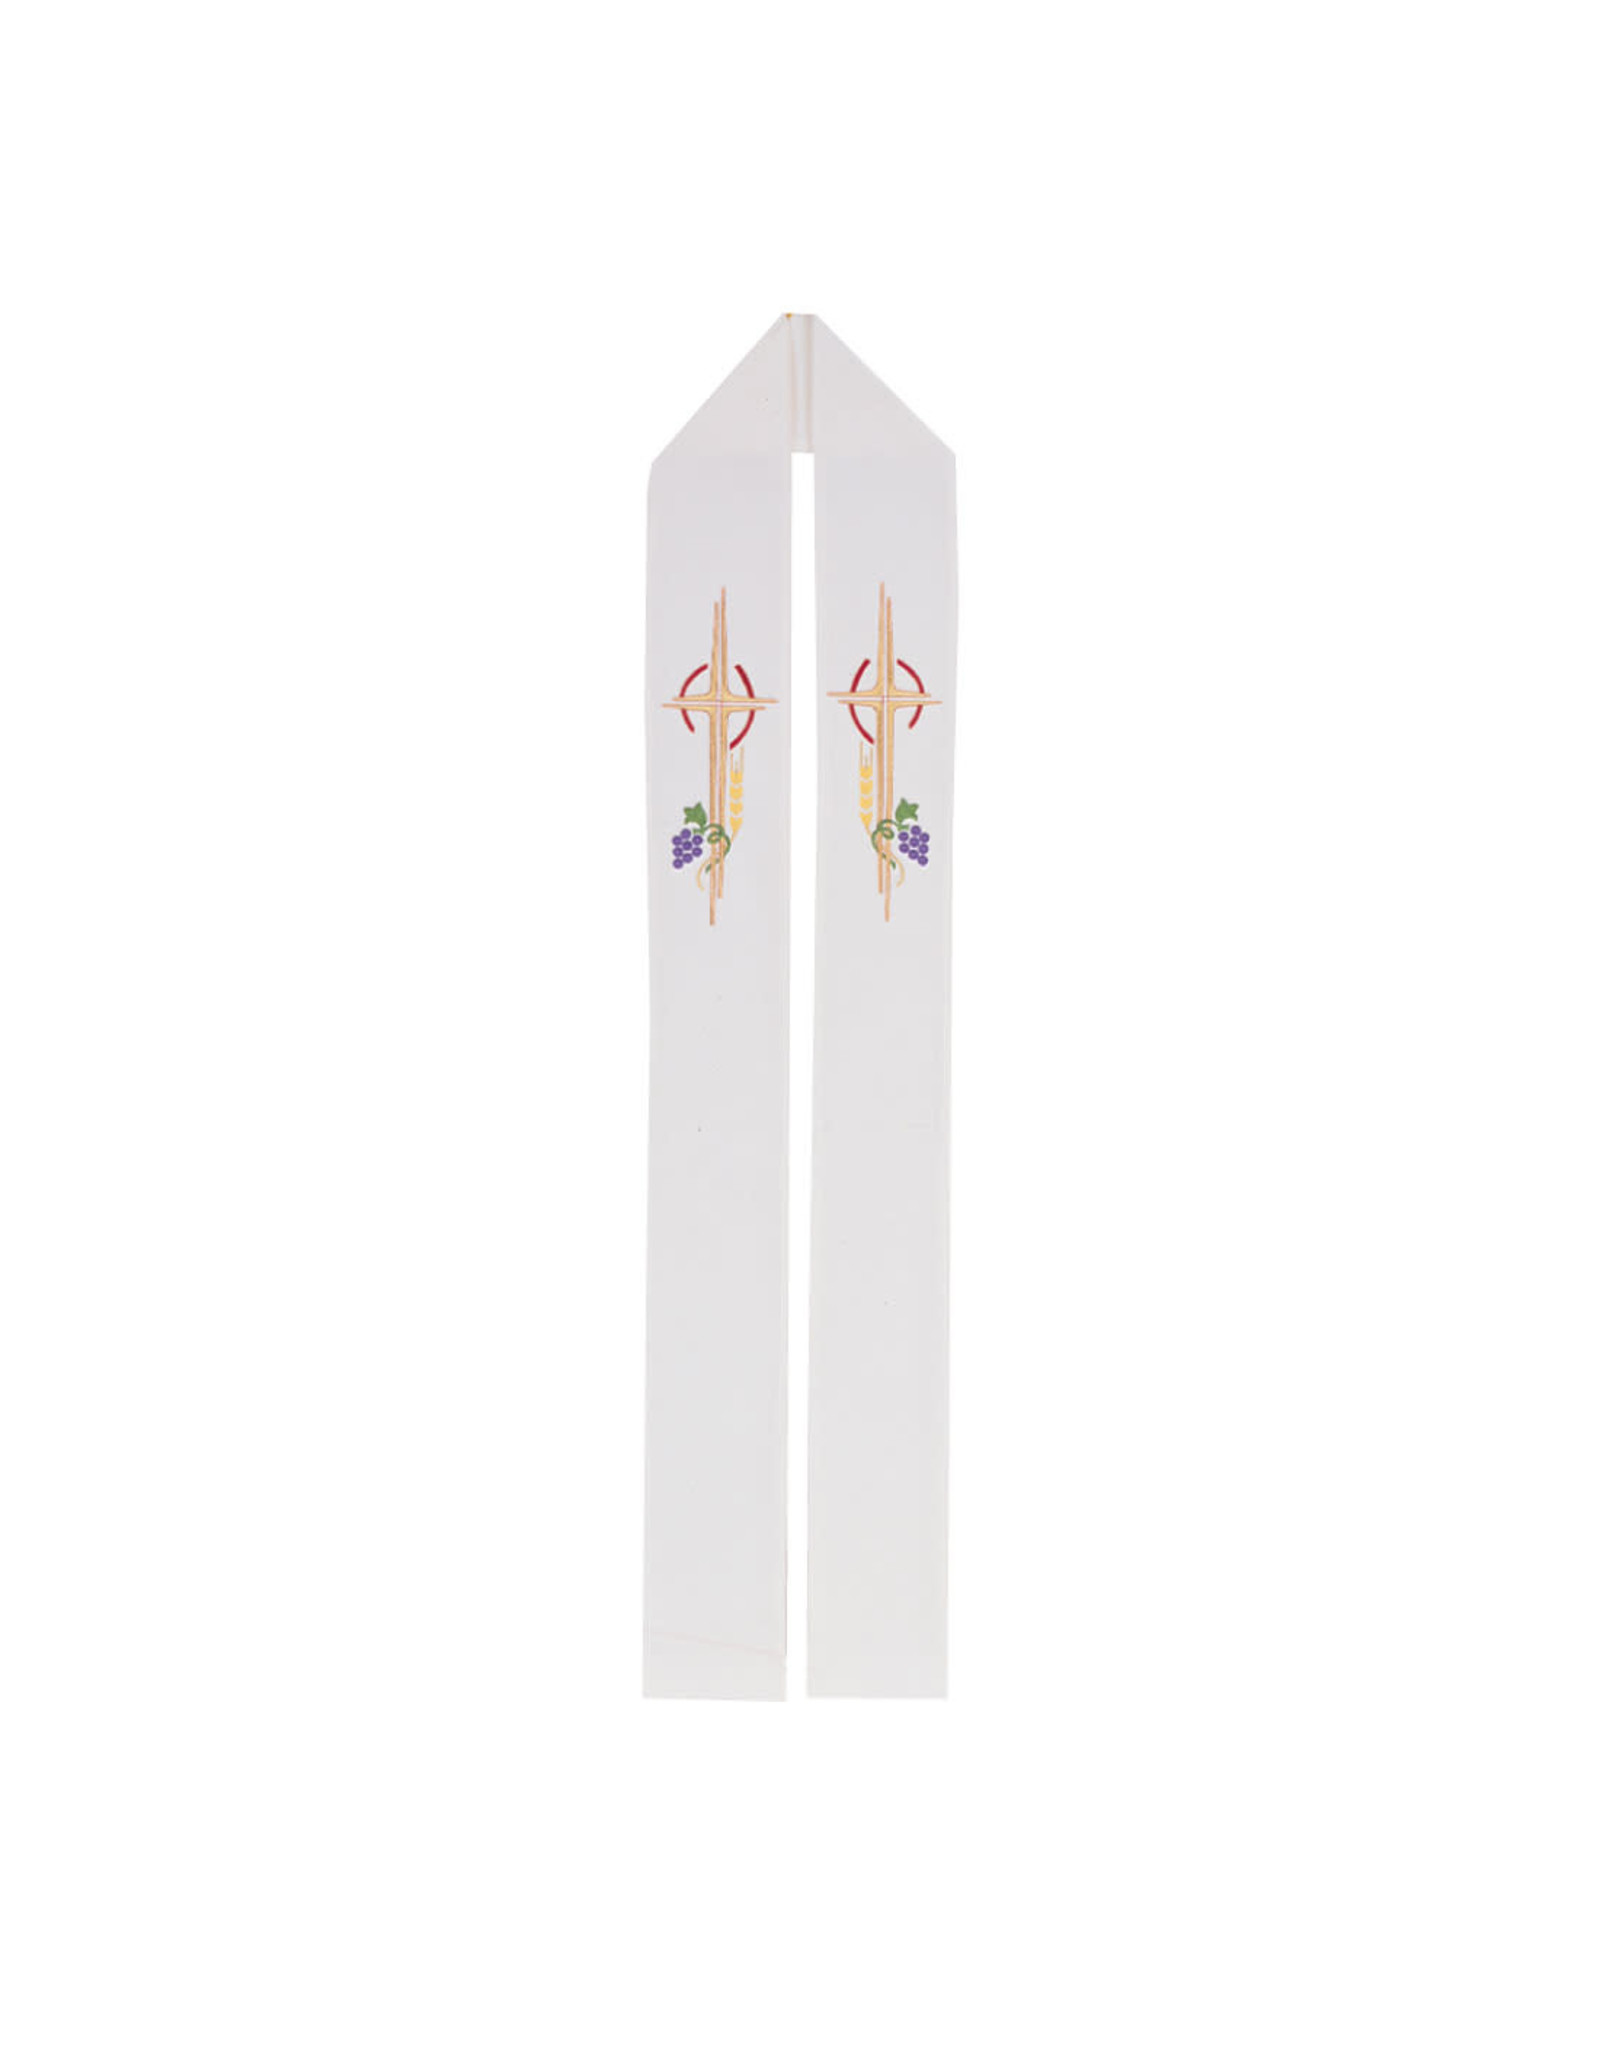 Harbro Stole (Priest) White Cross/Grapes